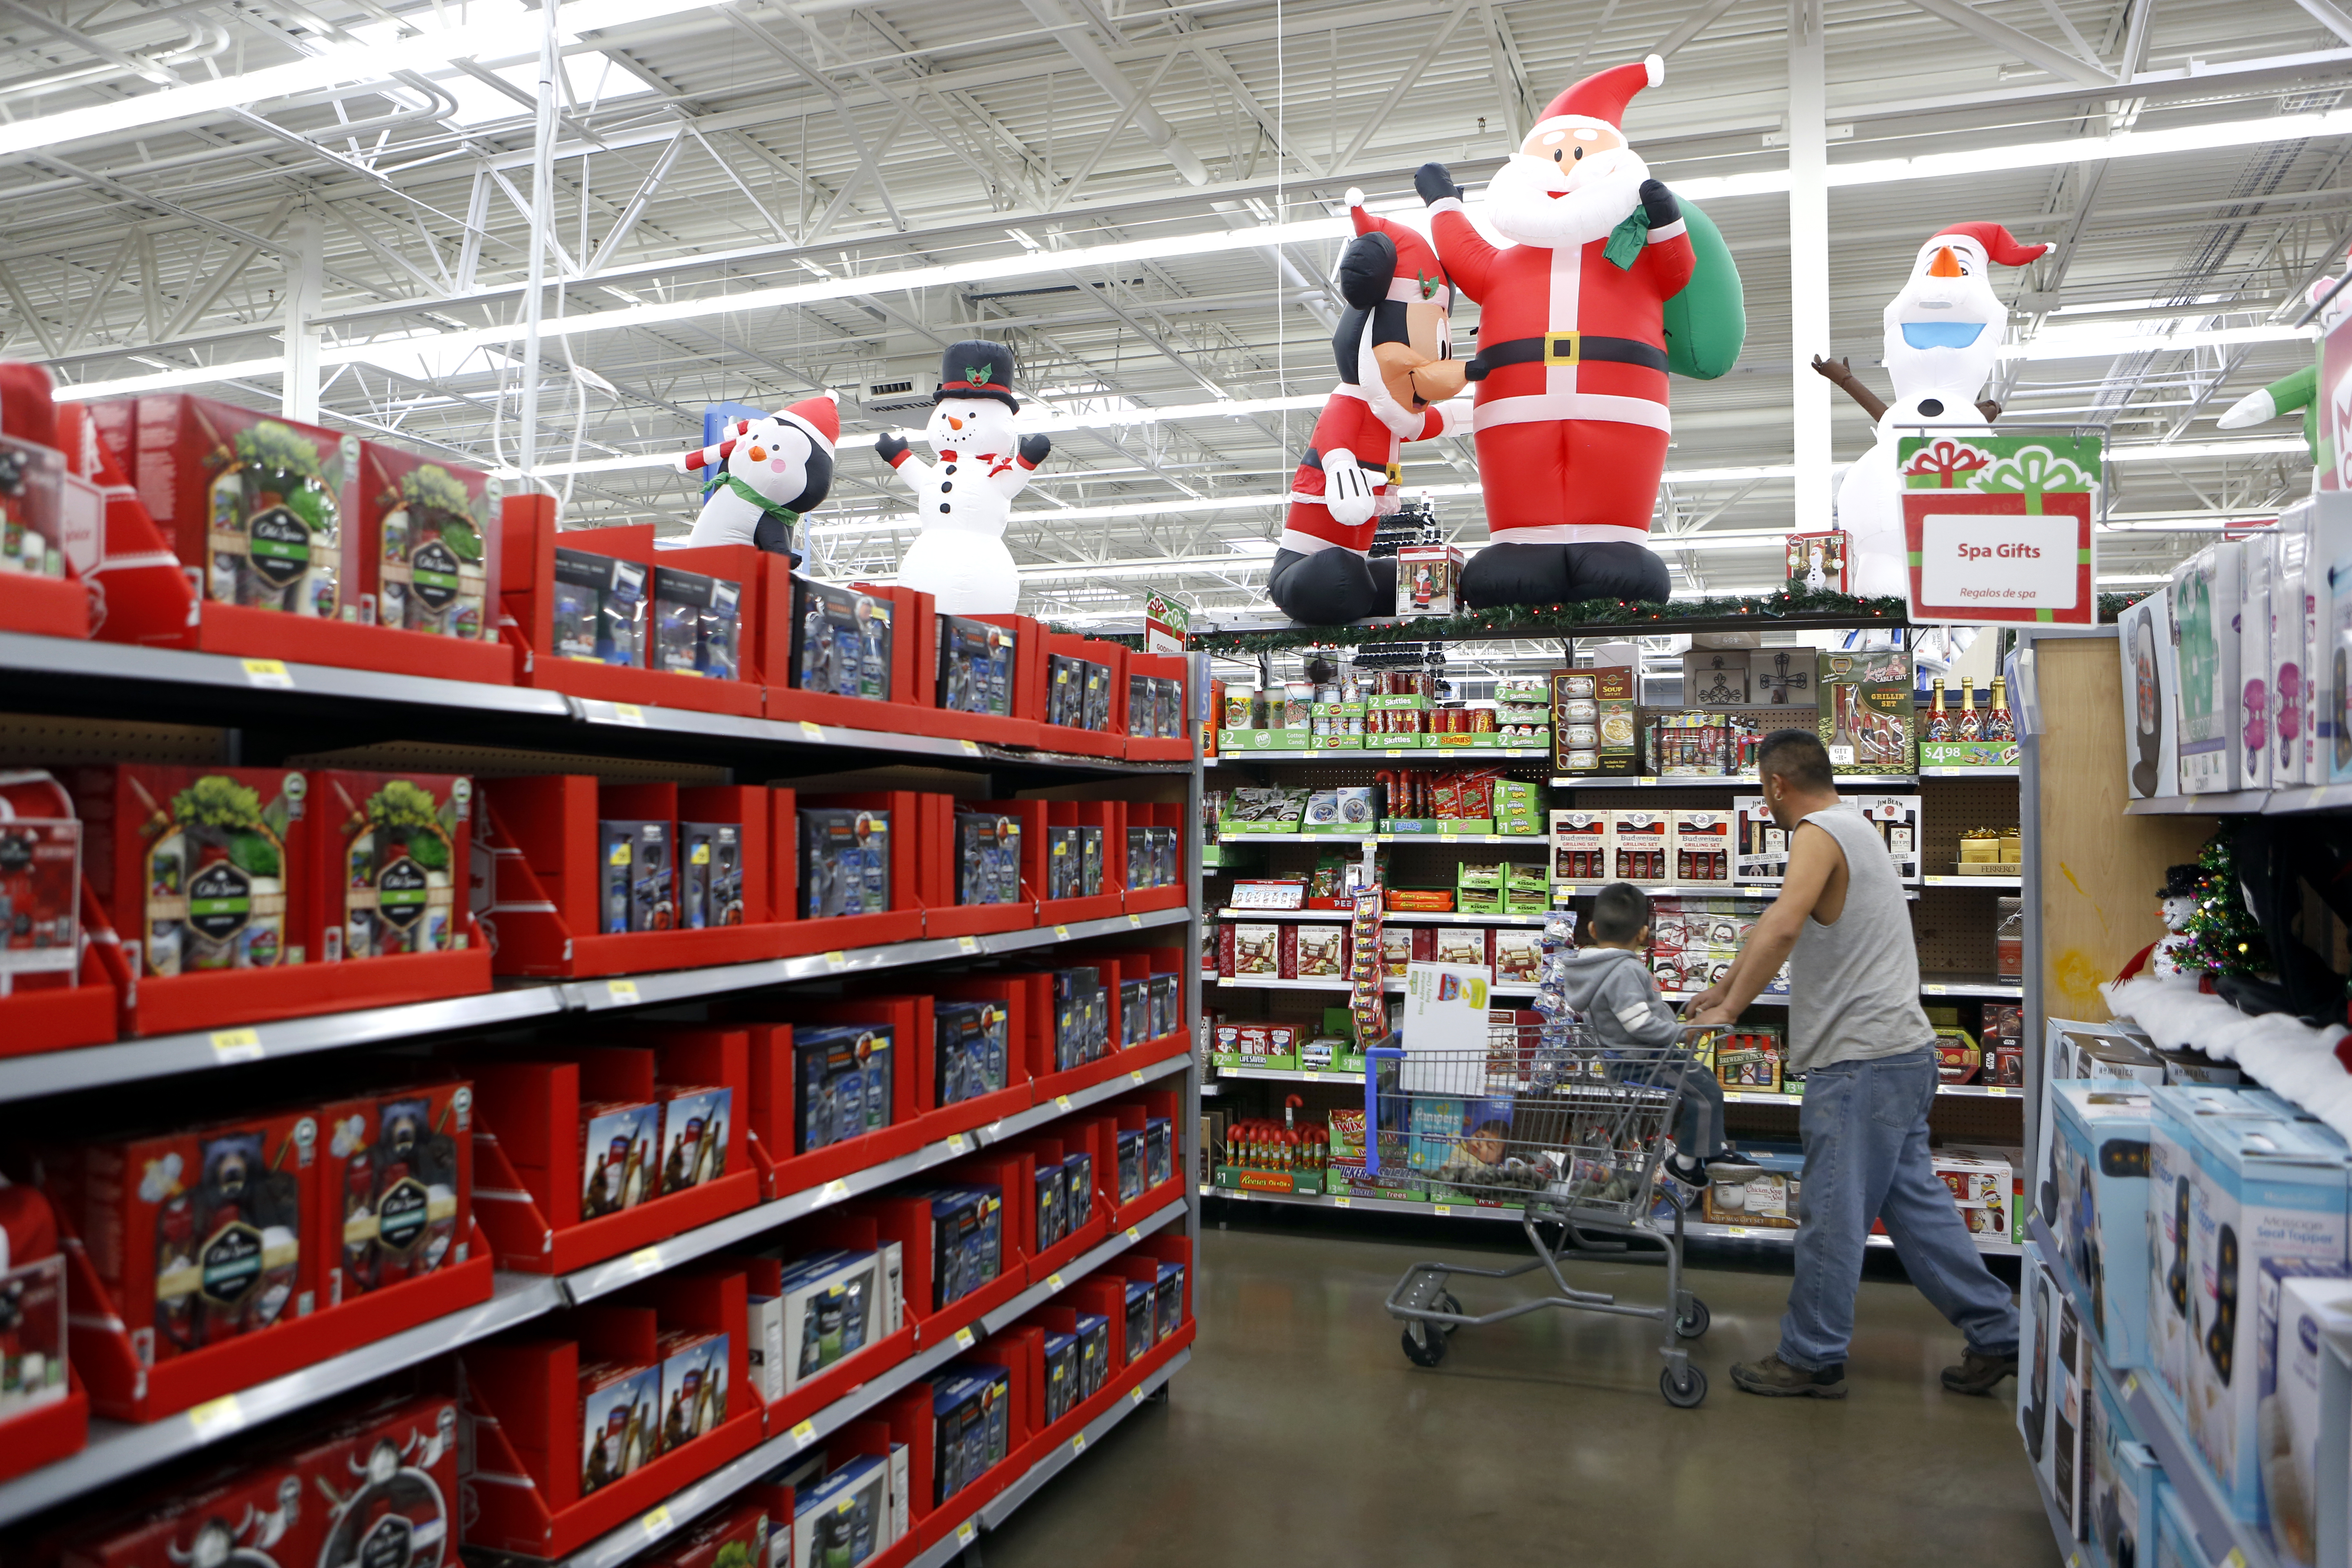 Shoppers walk through Christmas aisles at Walmart in Dallas. Photographed on Monday, November 16, 2015. Photo/Lara Solt